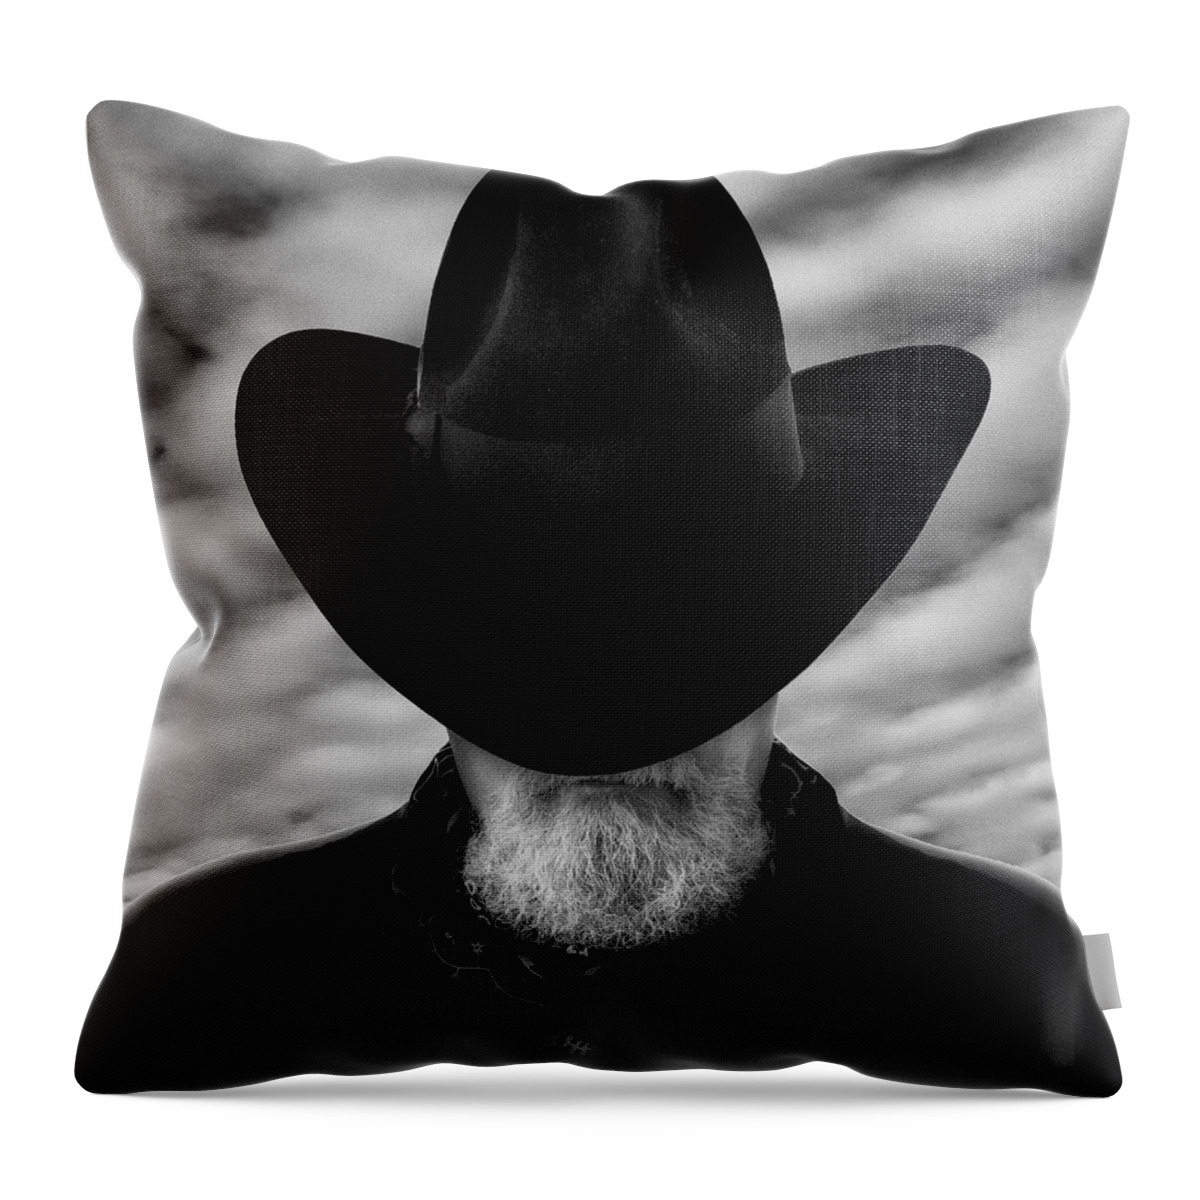 Sad Cowboy Throw Pillow featuring the photograph Sad Cowboy Selfie by Gary Warnimont